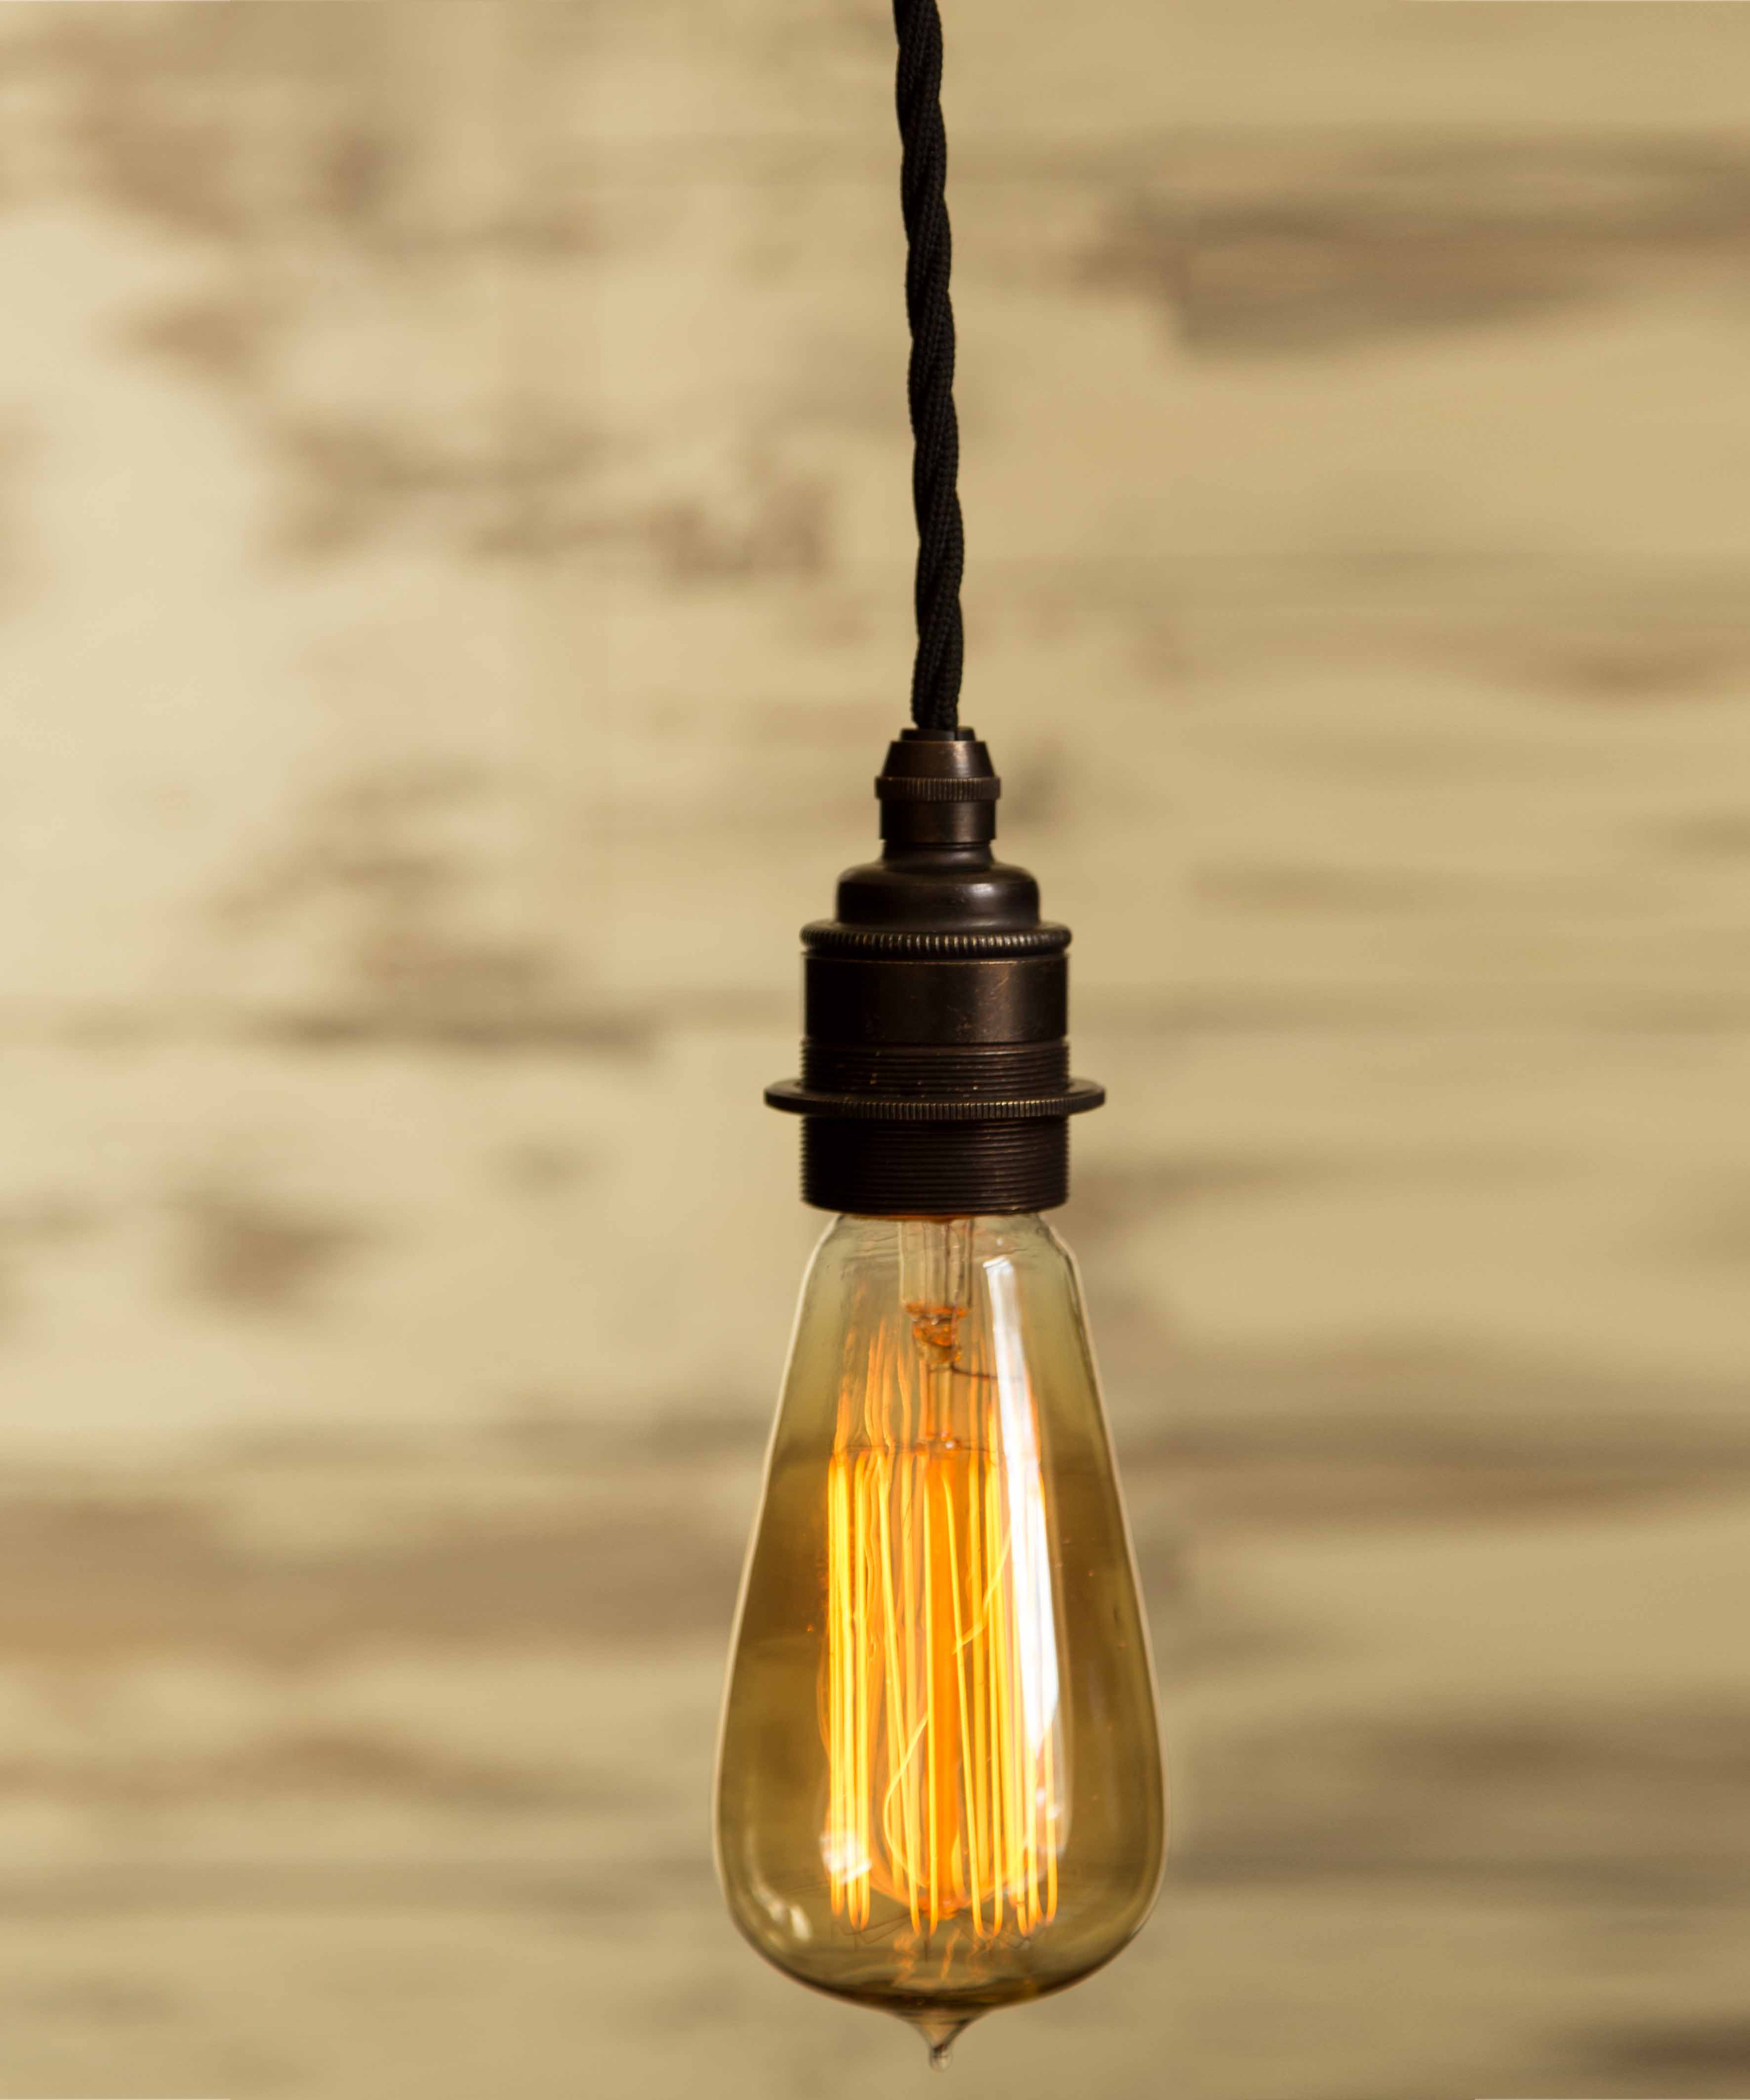 Old Lamp Holders - Lamp Design Ideas